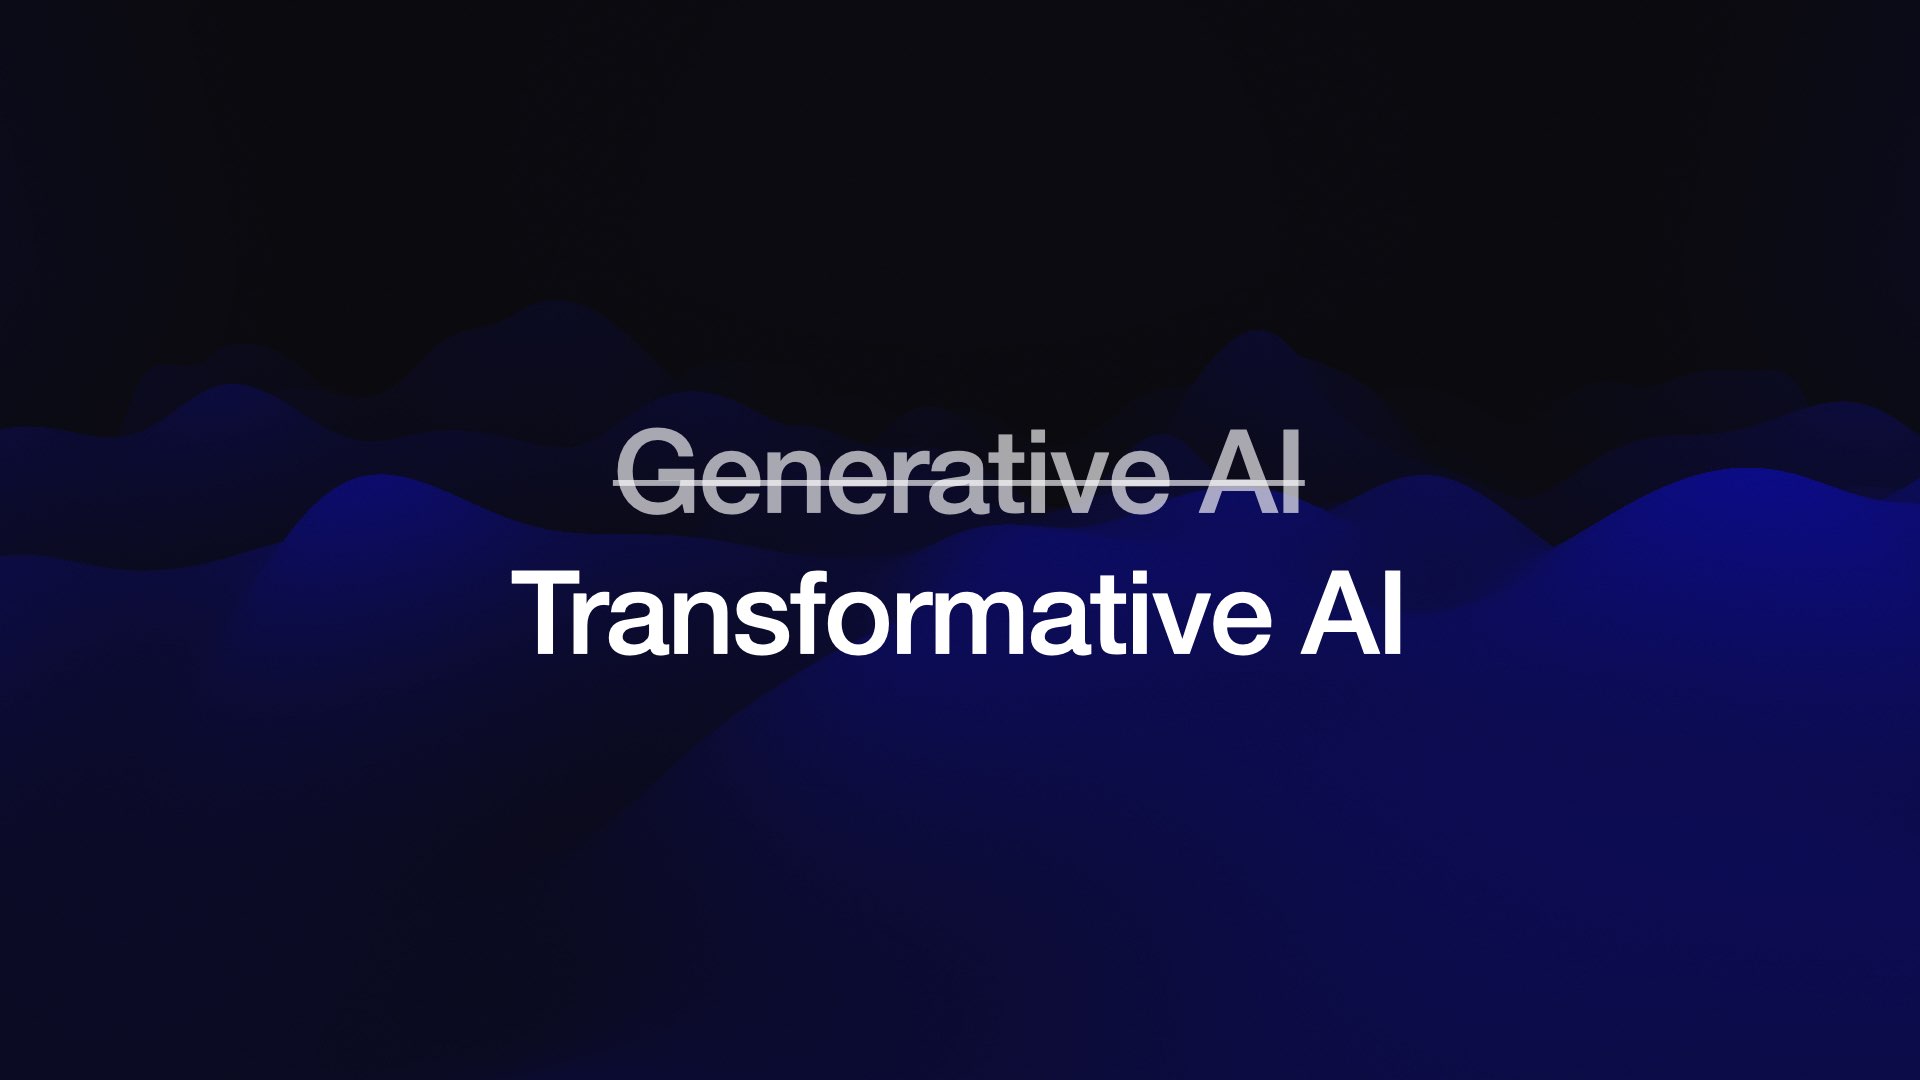 Crossed out: Generative-AI Transformative AI 